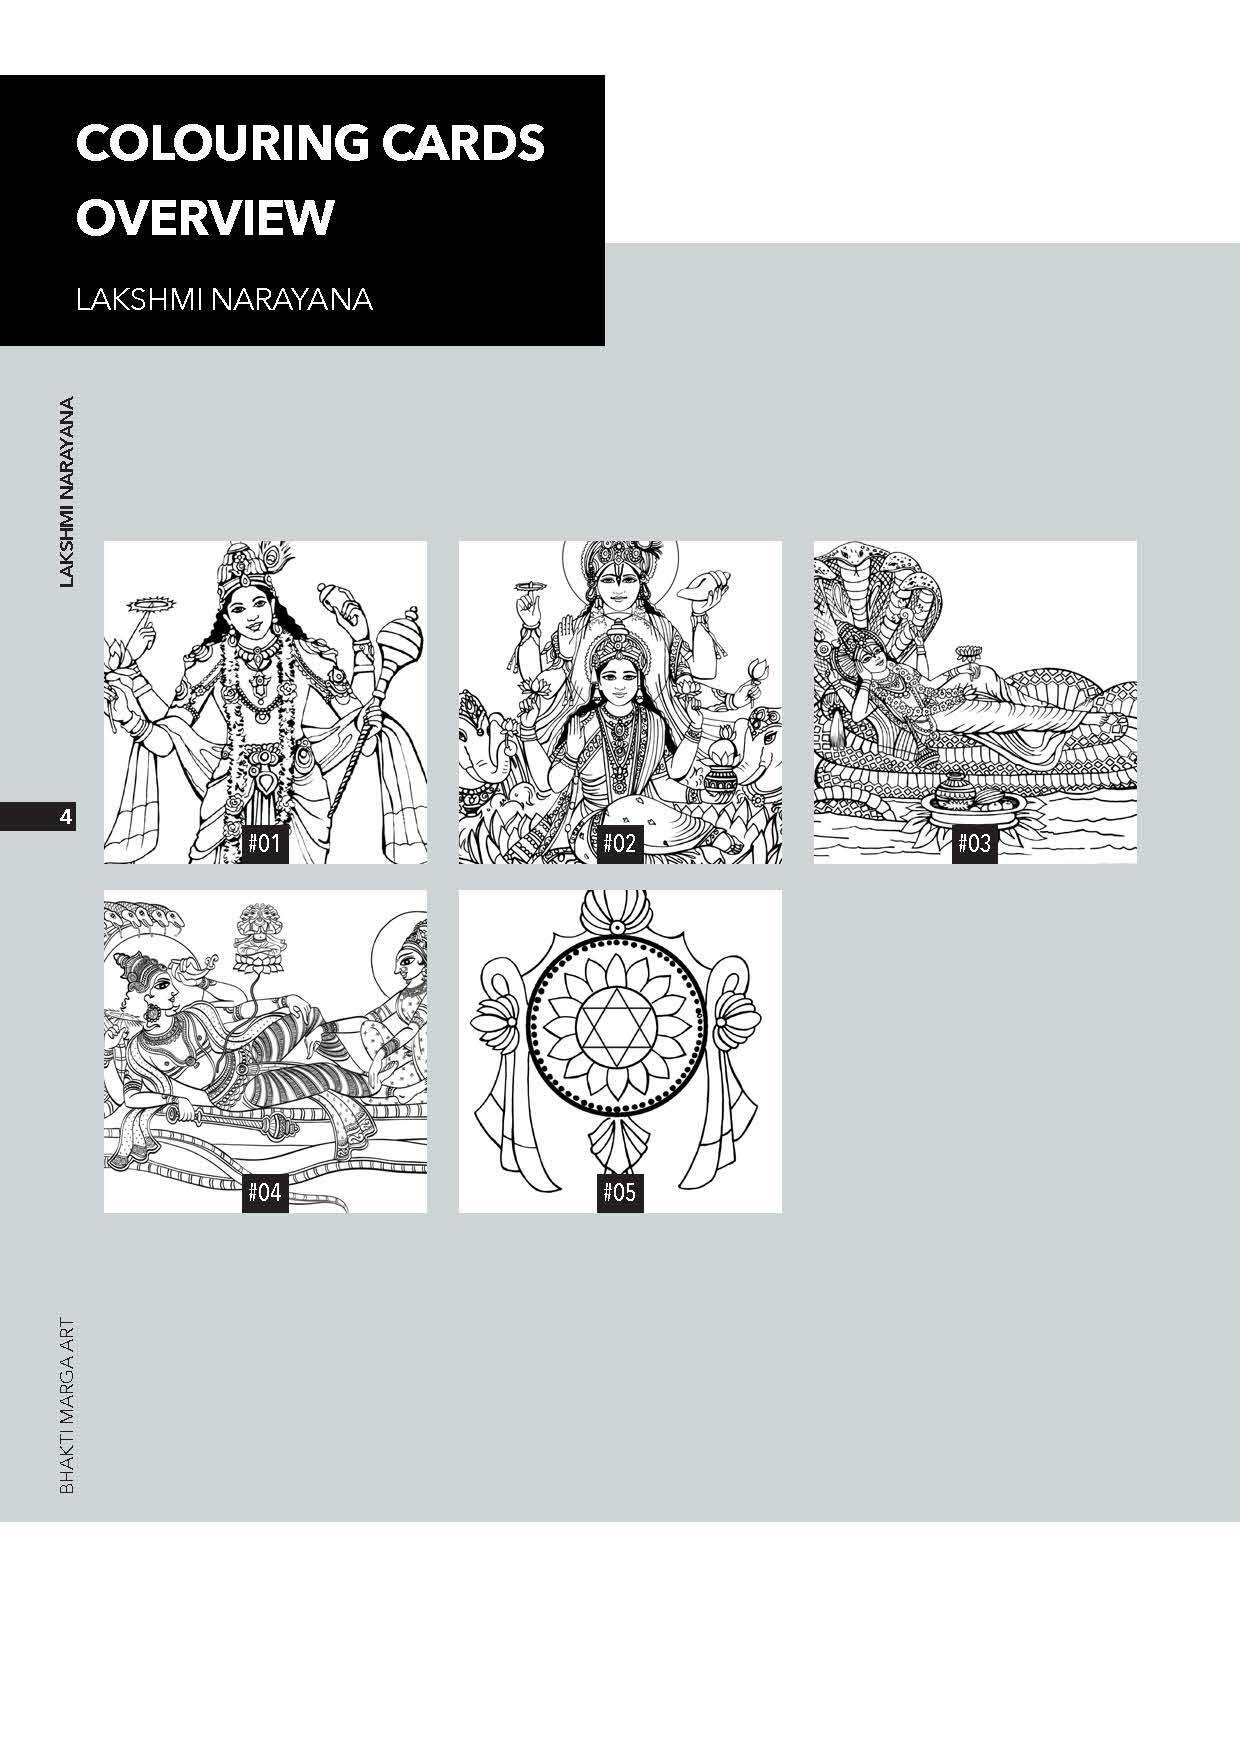 Colouring Cards 'LAKSHMI NARAYANA'